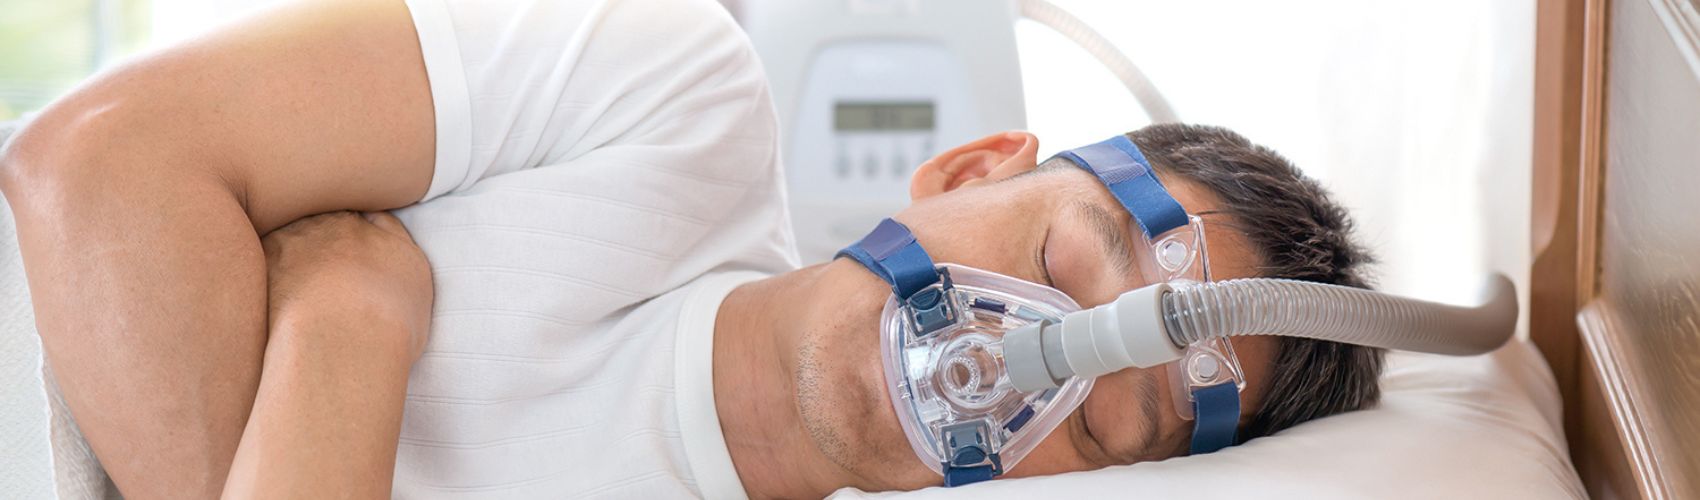 Man sleeping with breathing apparatus